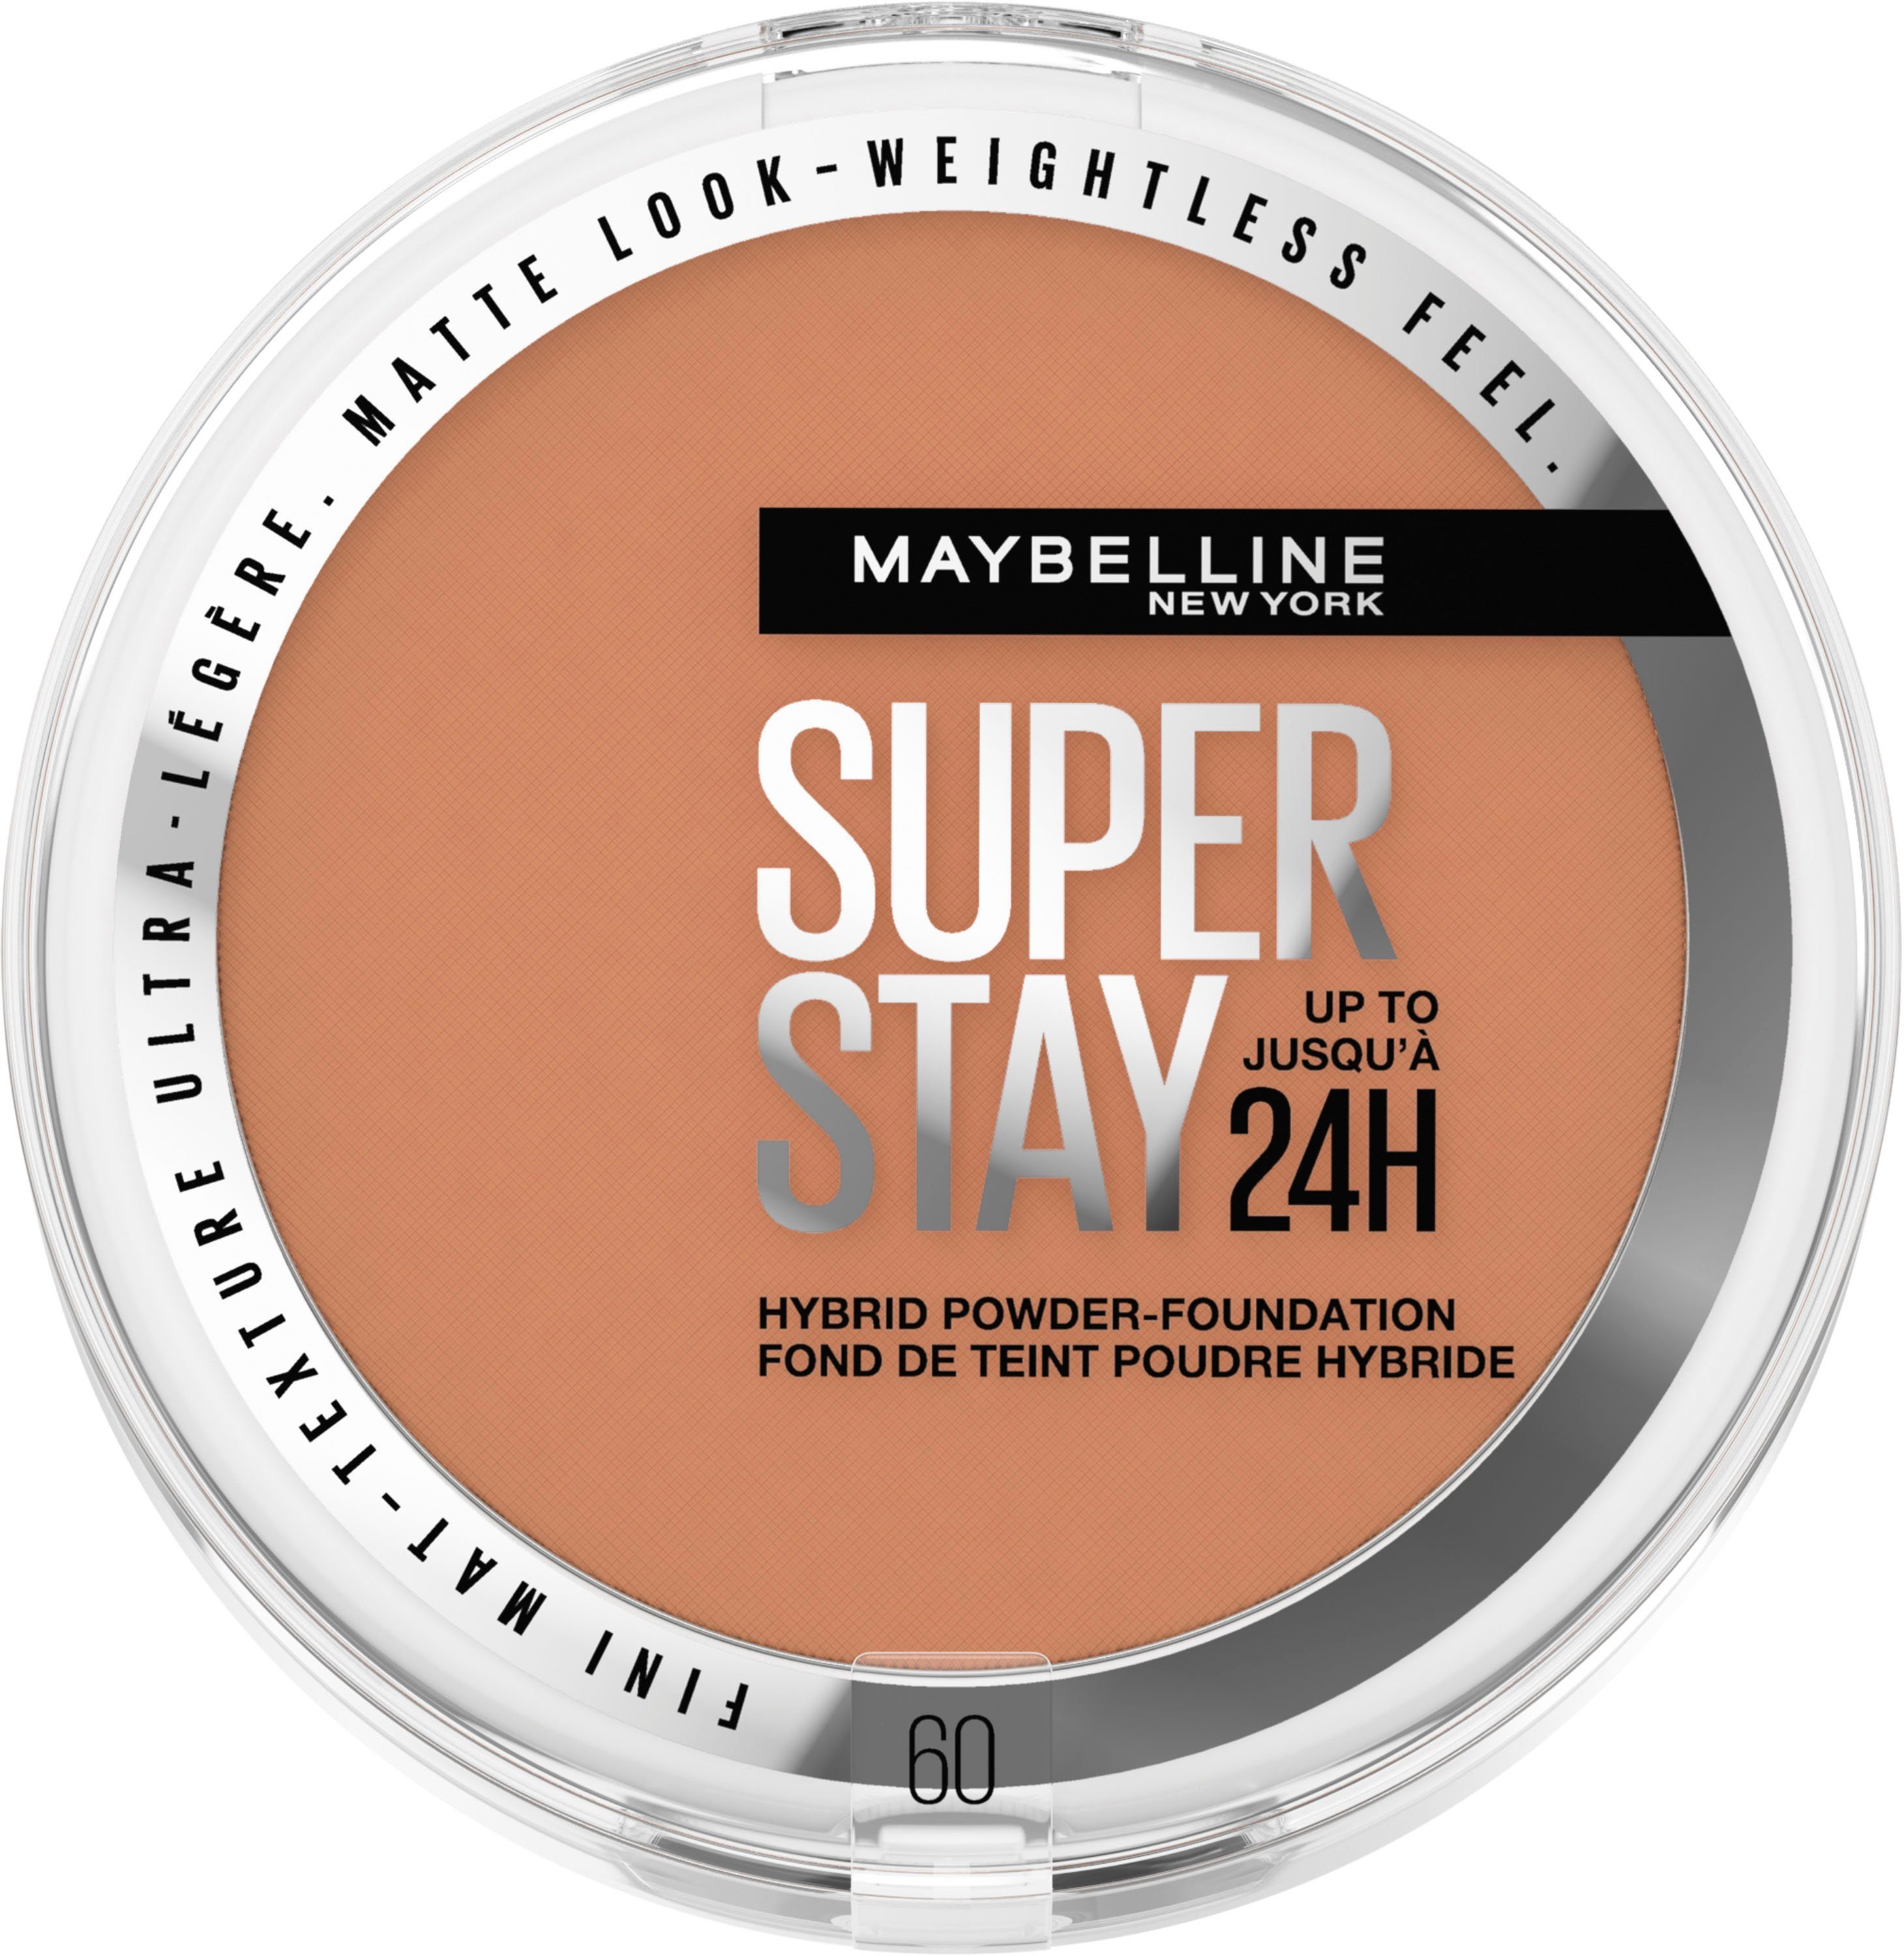 [Beliebte Produkte] MAYBELLINE NEW YORK Foundation Stay Maybelline Puder York Hybrides Super New Make-Up